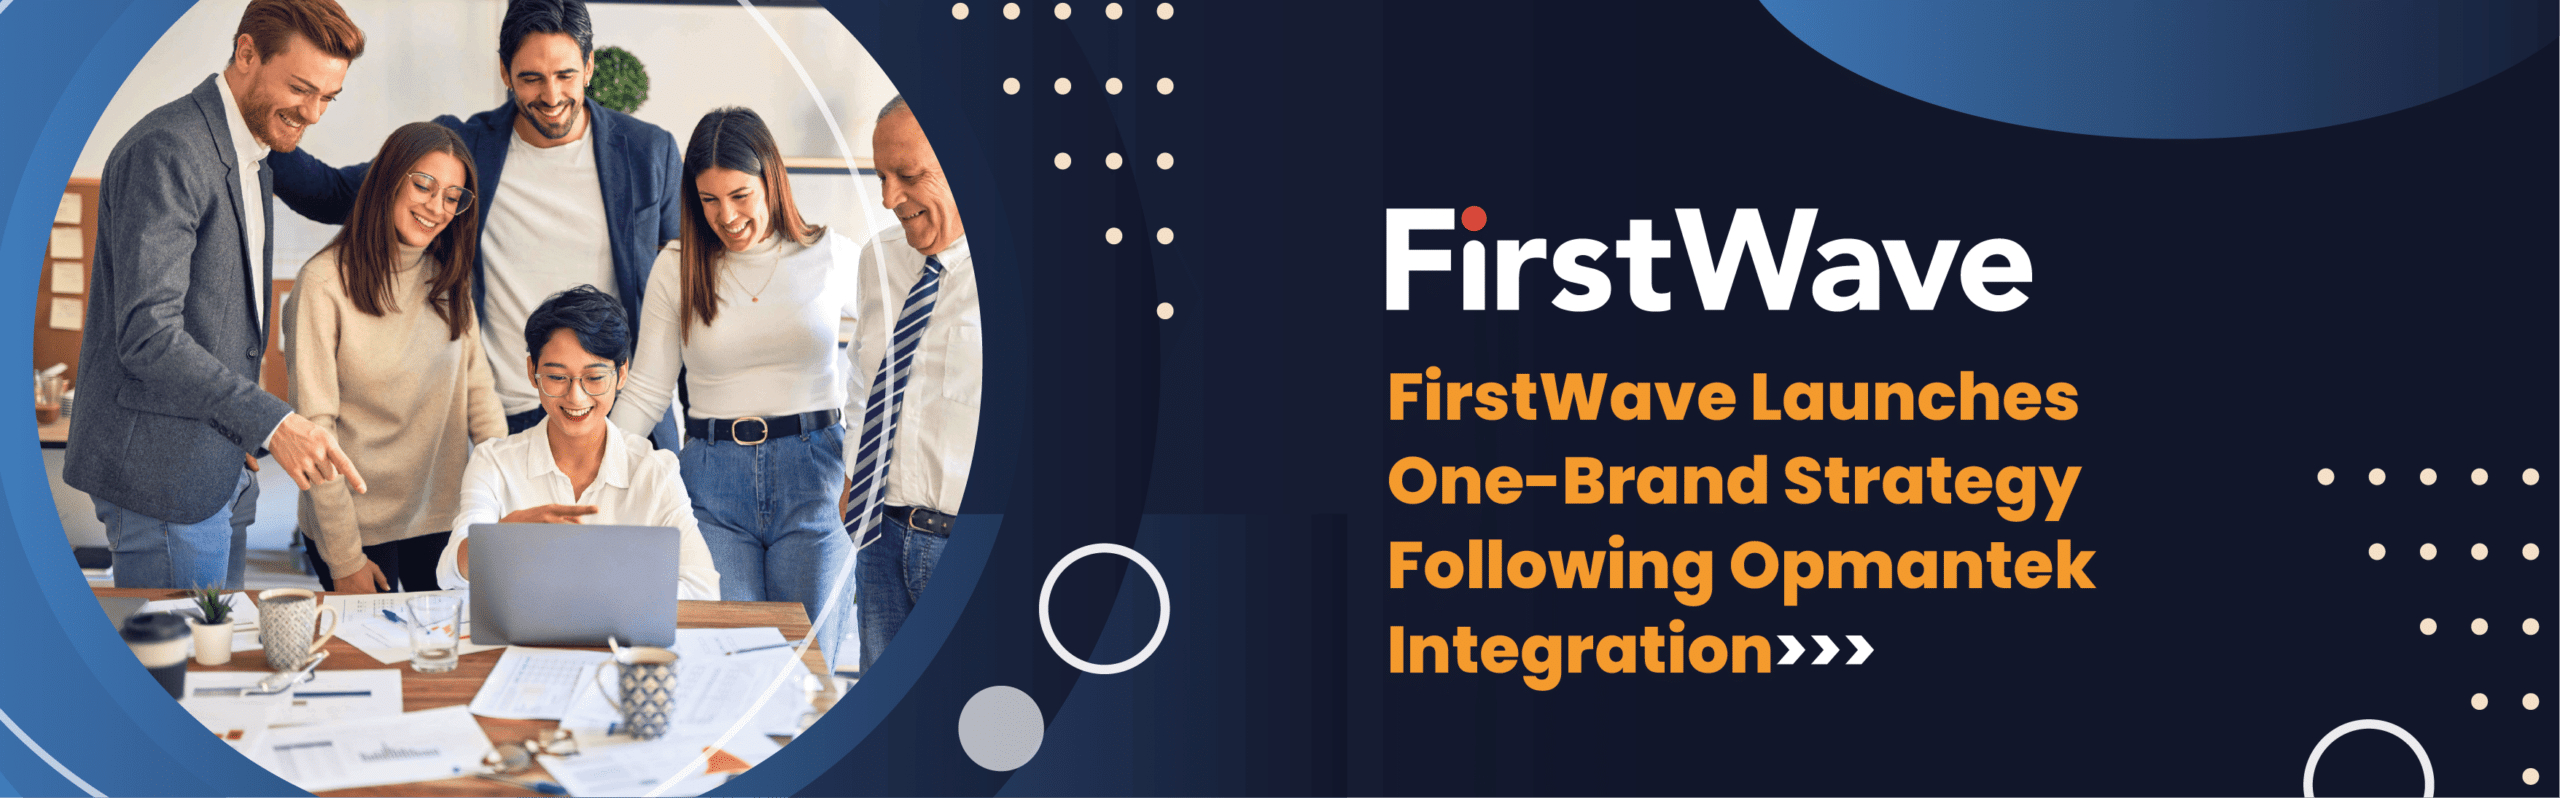 FirstWave Launches One-Brand Strategy Following Opmantek Integration